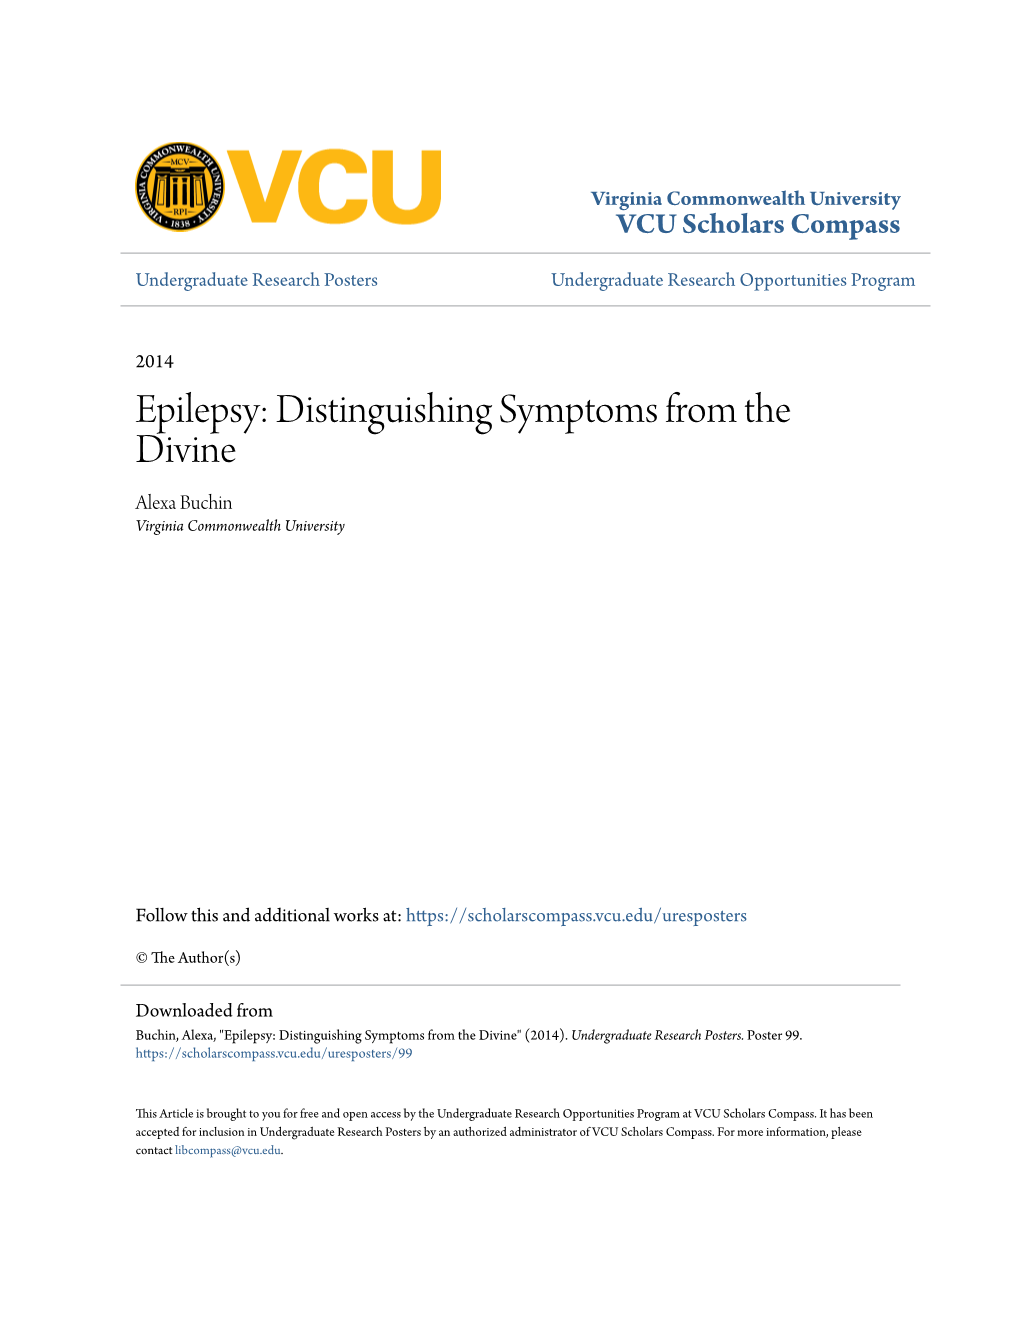 Epilepsy: Distinguishing Symptoms from the Divine Alexa Buchin Virginia Commonwealth University